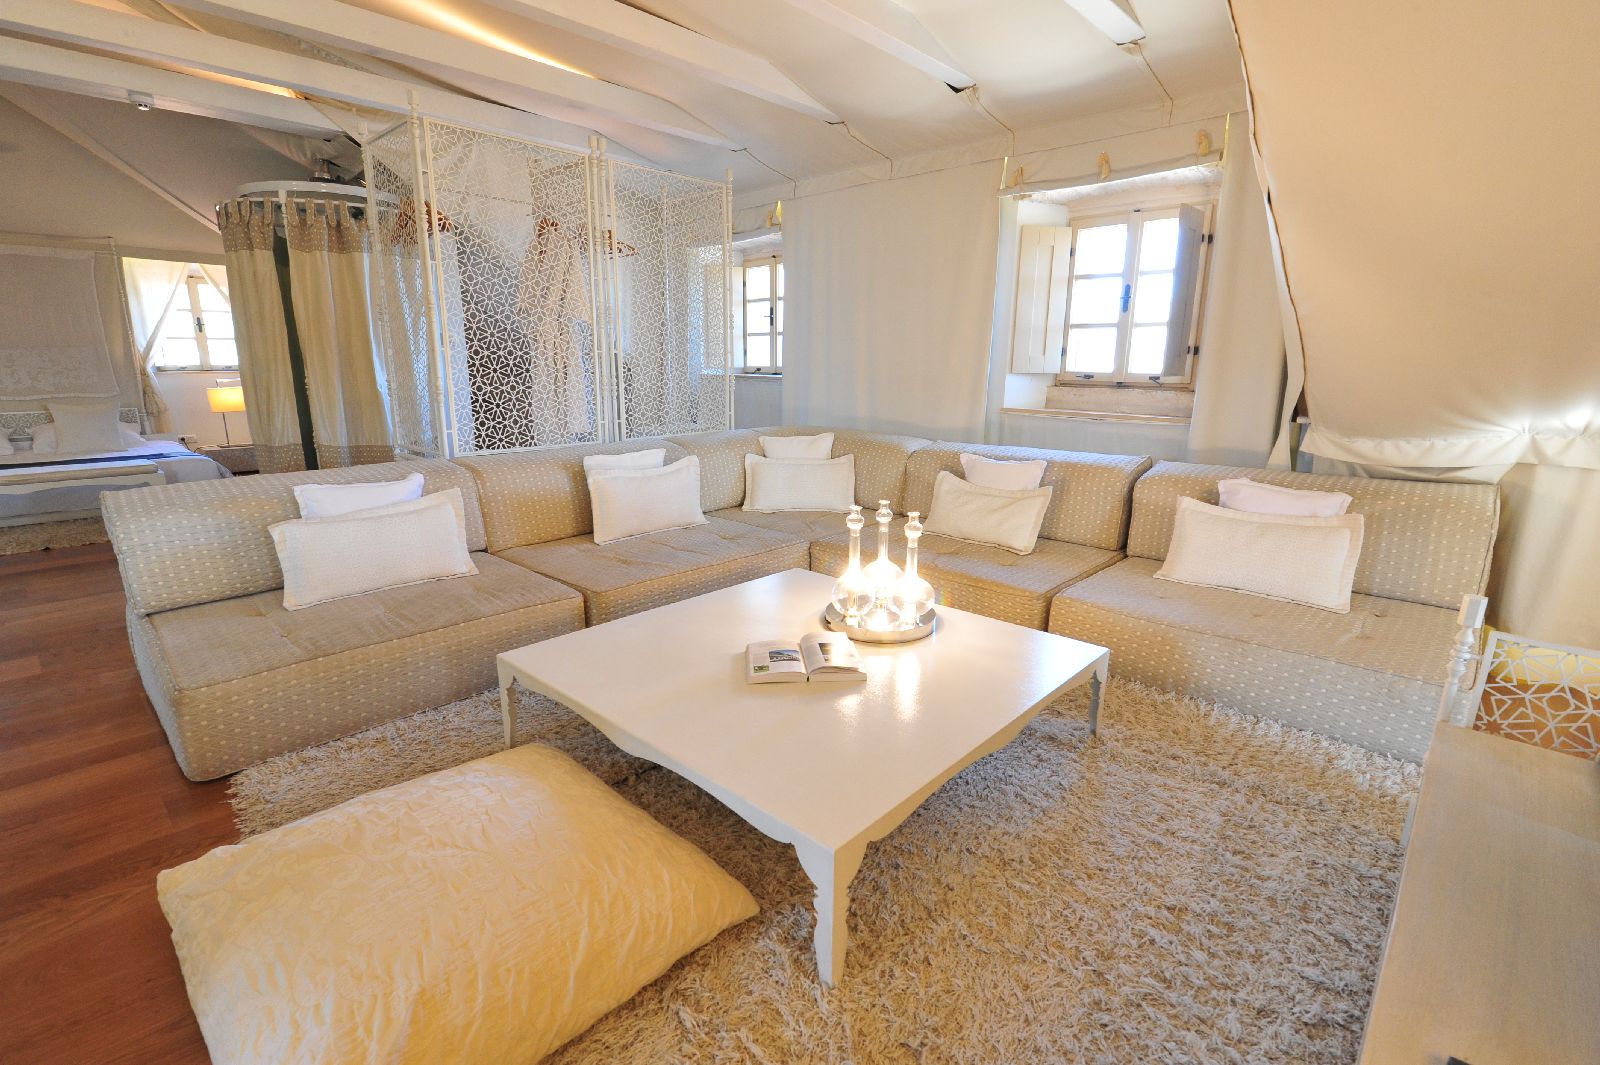 Arabia suite at the Lesic Dimitri Palace Korcula Croatia